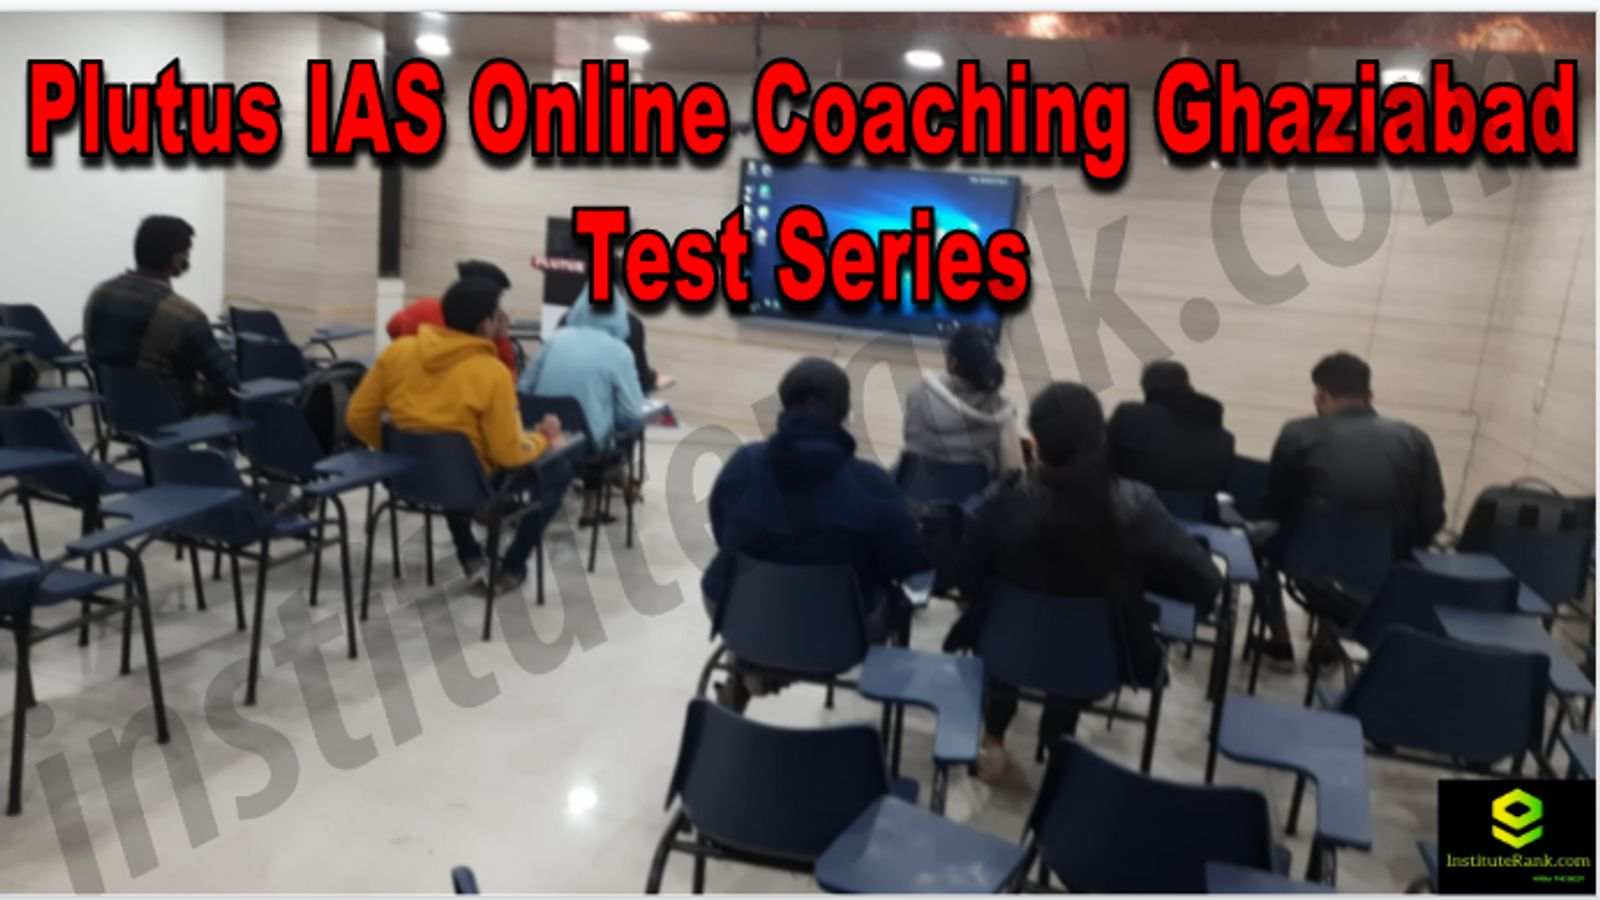 Plutus IAS Online Coaching Ghaziabad Reviews Test Series